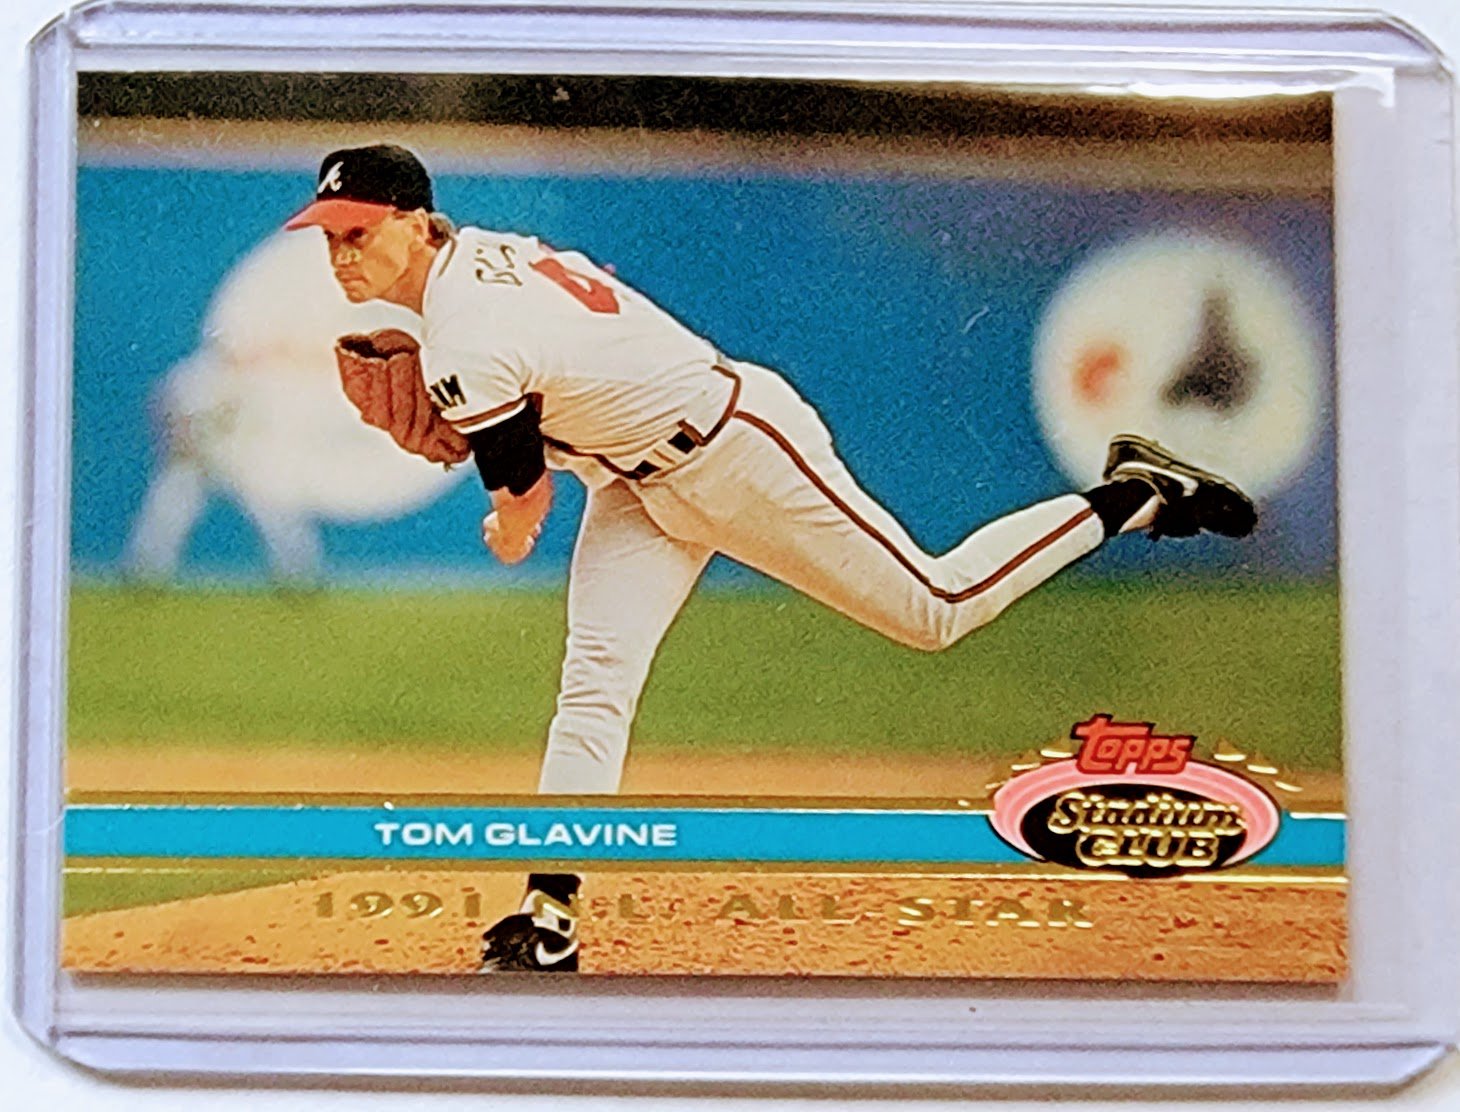 1992 Topps Stadium Club Dome Tom Glavine 1991 All Star MLB Baseball Trading Card TPTV simple Xclusive Collectibles   